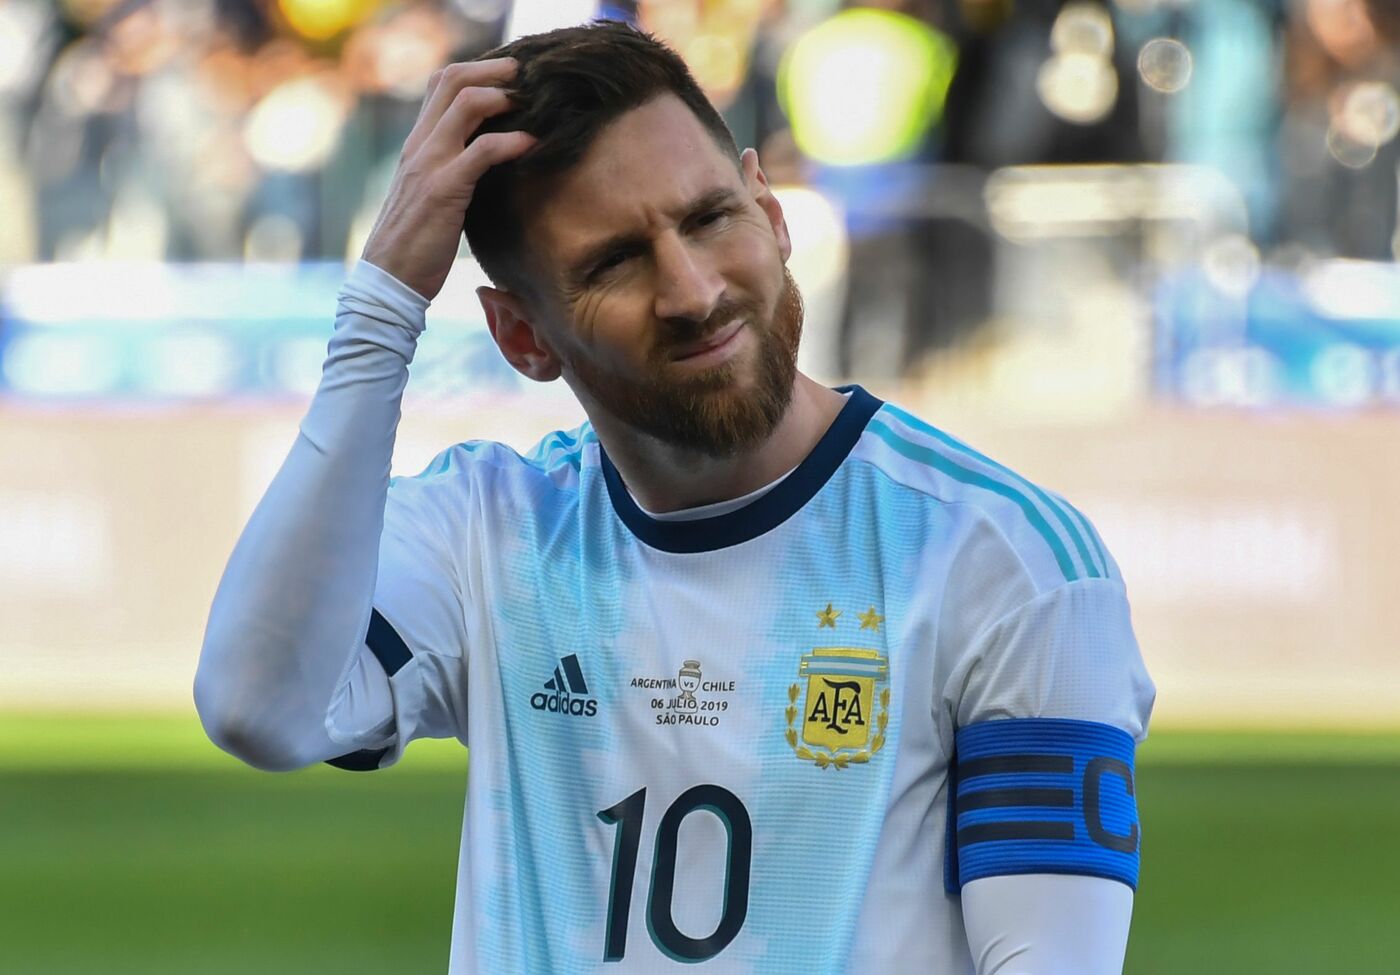 Pronostici oggi chat Blab Live qatar 2022 finale mondiale Lionel Messi Argentina